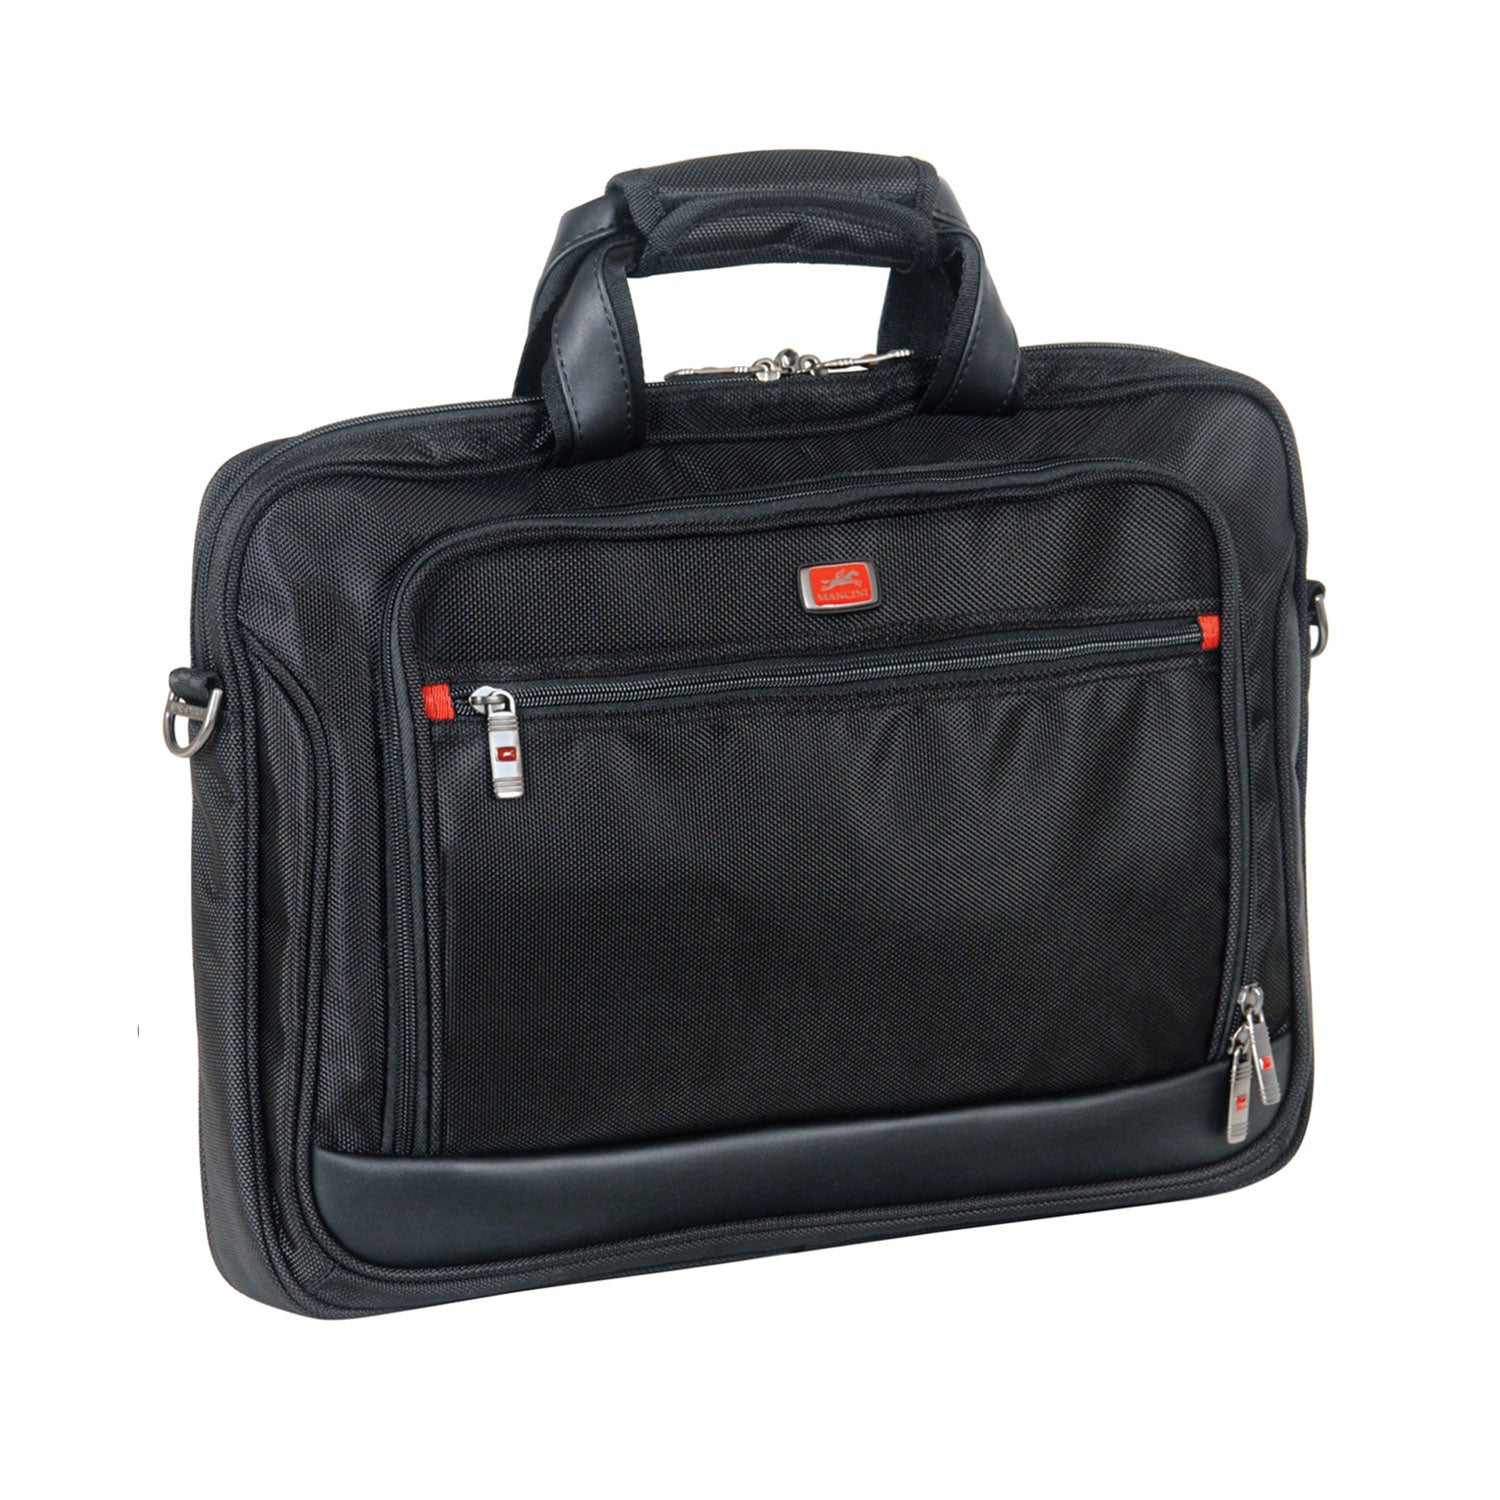 Mancini Leather Compucase Slim Laptop / Tablet Briefcase with RFID Secure Pocket, 16.25" x 1.75" x 12", Black